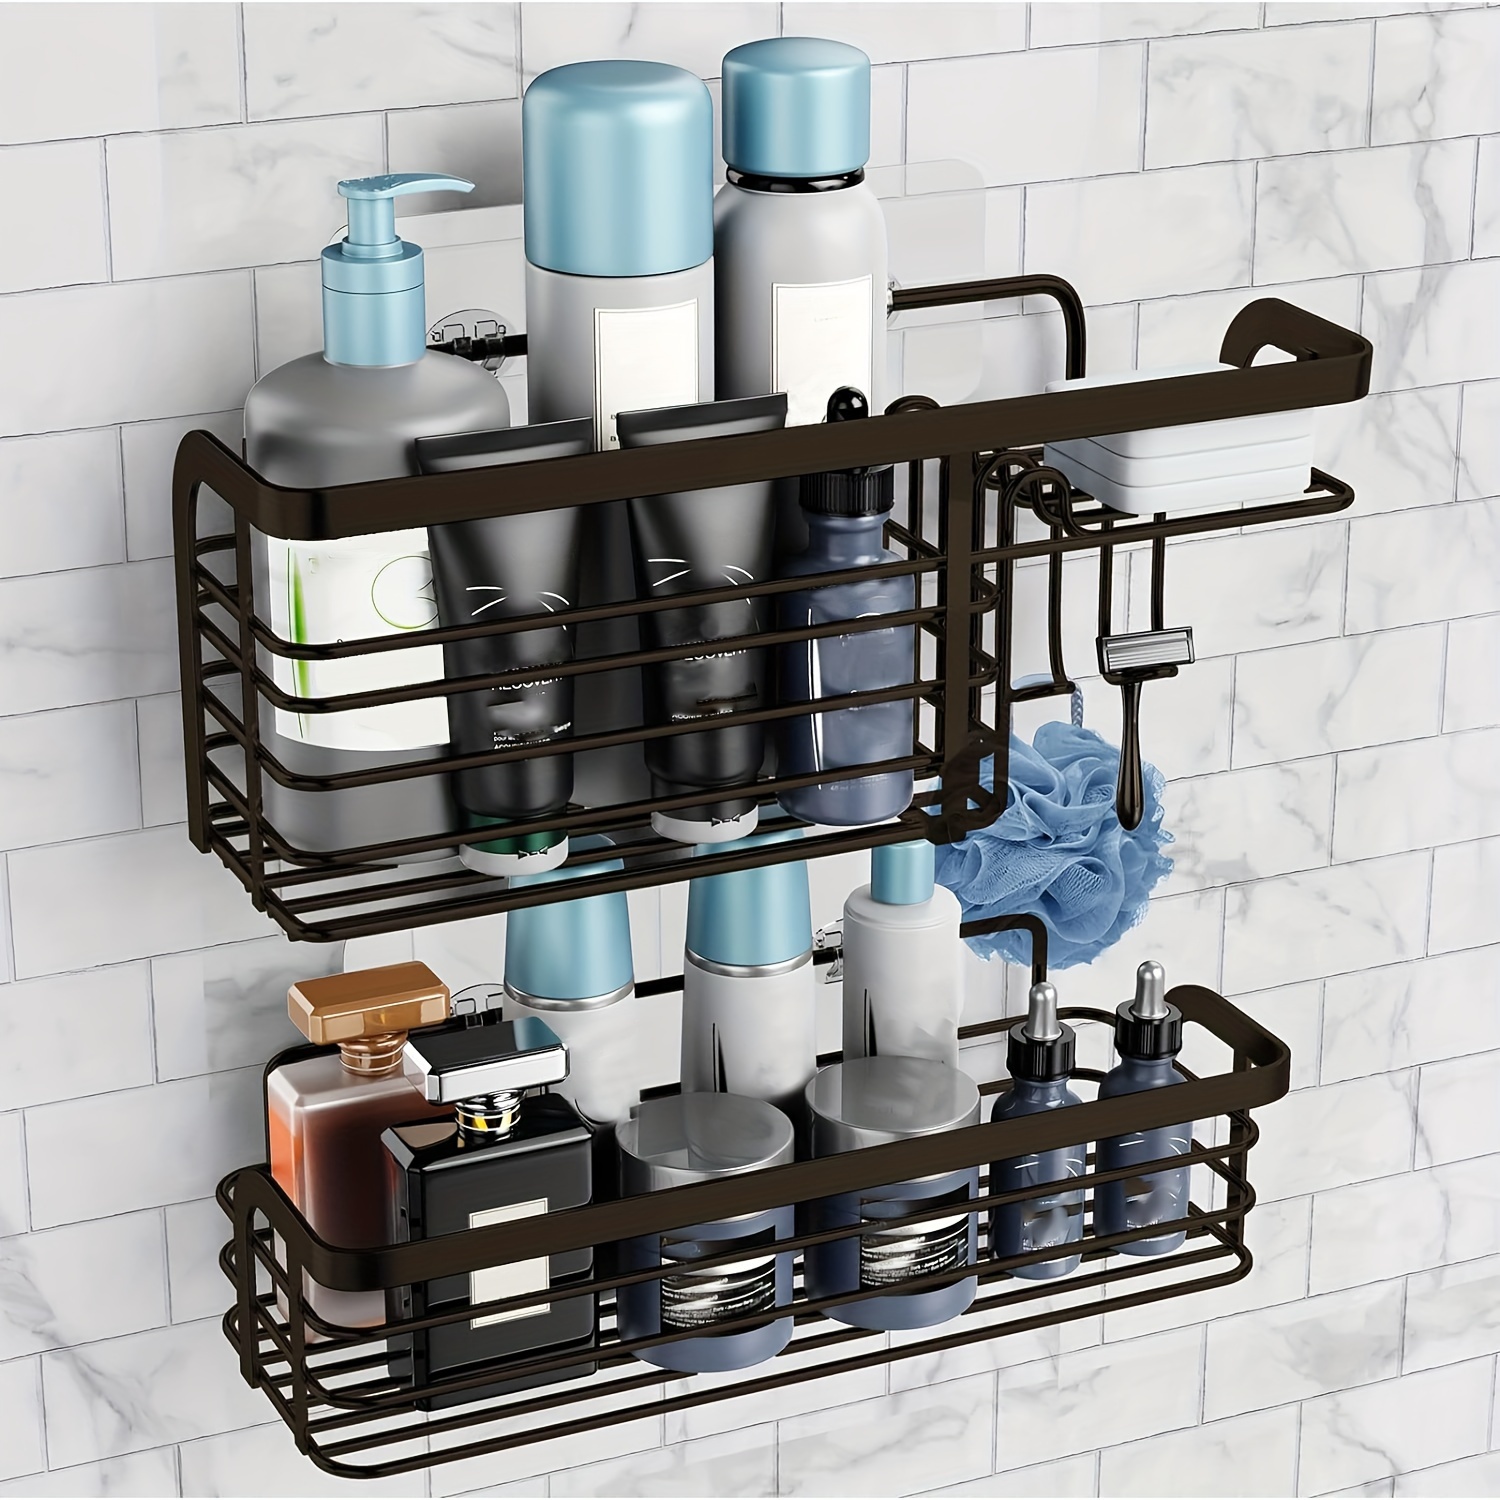 MORNITE Bathroom Organizer Mirror, Restroom Shelf Adhesive Wall Mount No Drilling Basket Rack Shelves Shower Caddy Blue